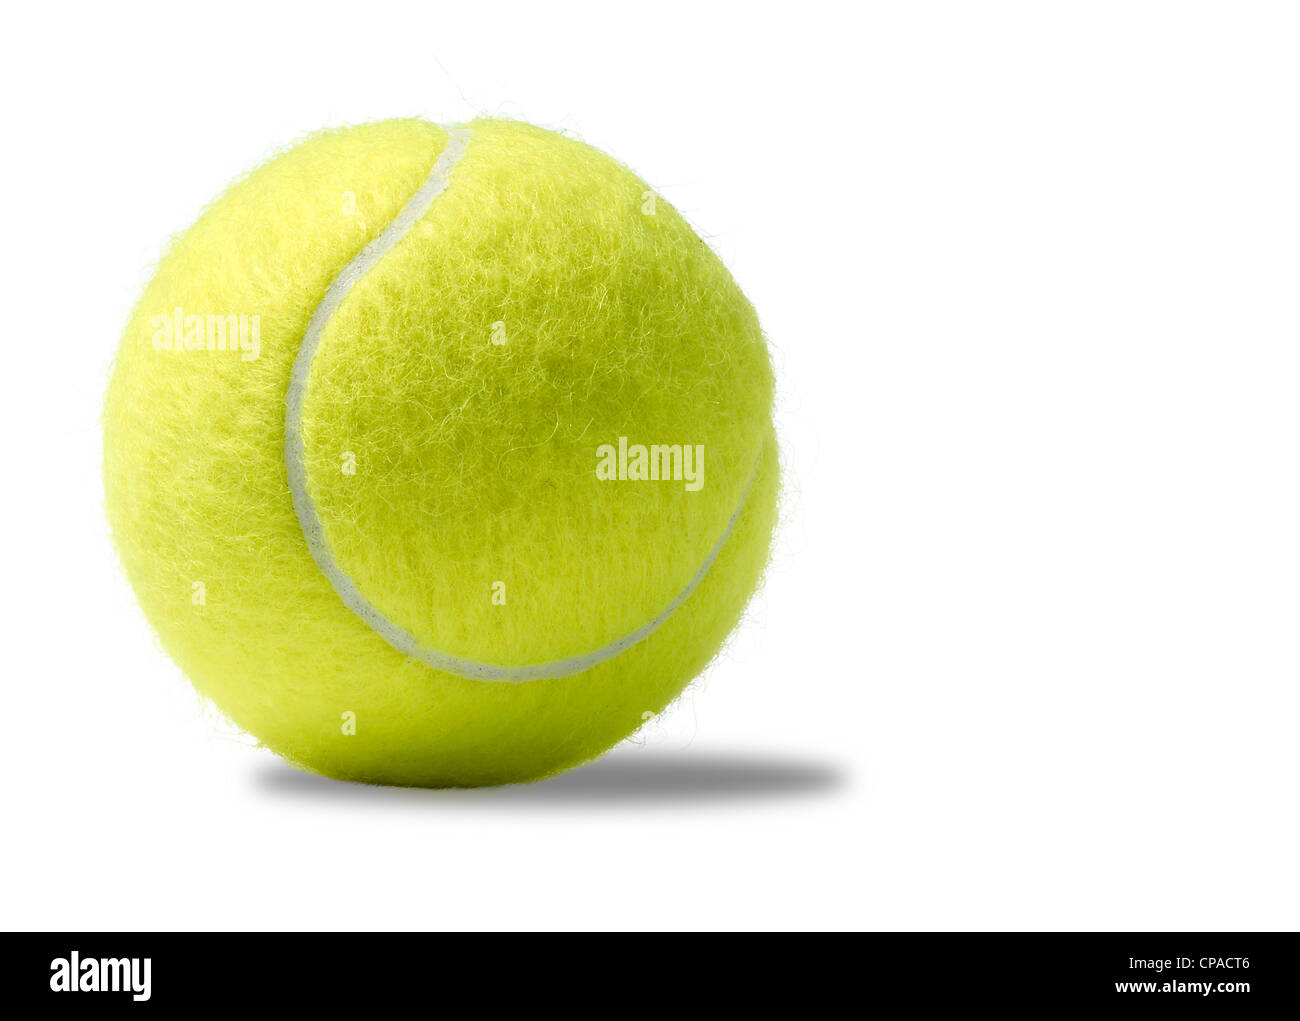 Una pelota de tenis amarilla sobre un fondo blanco. Foto de stock